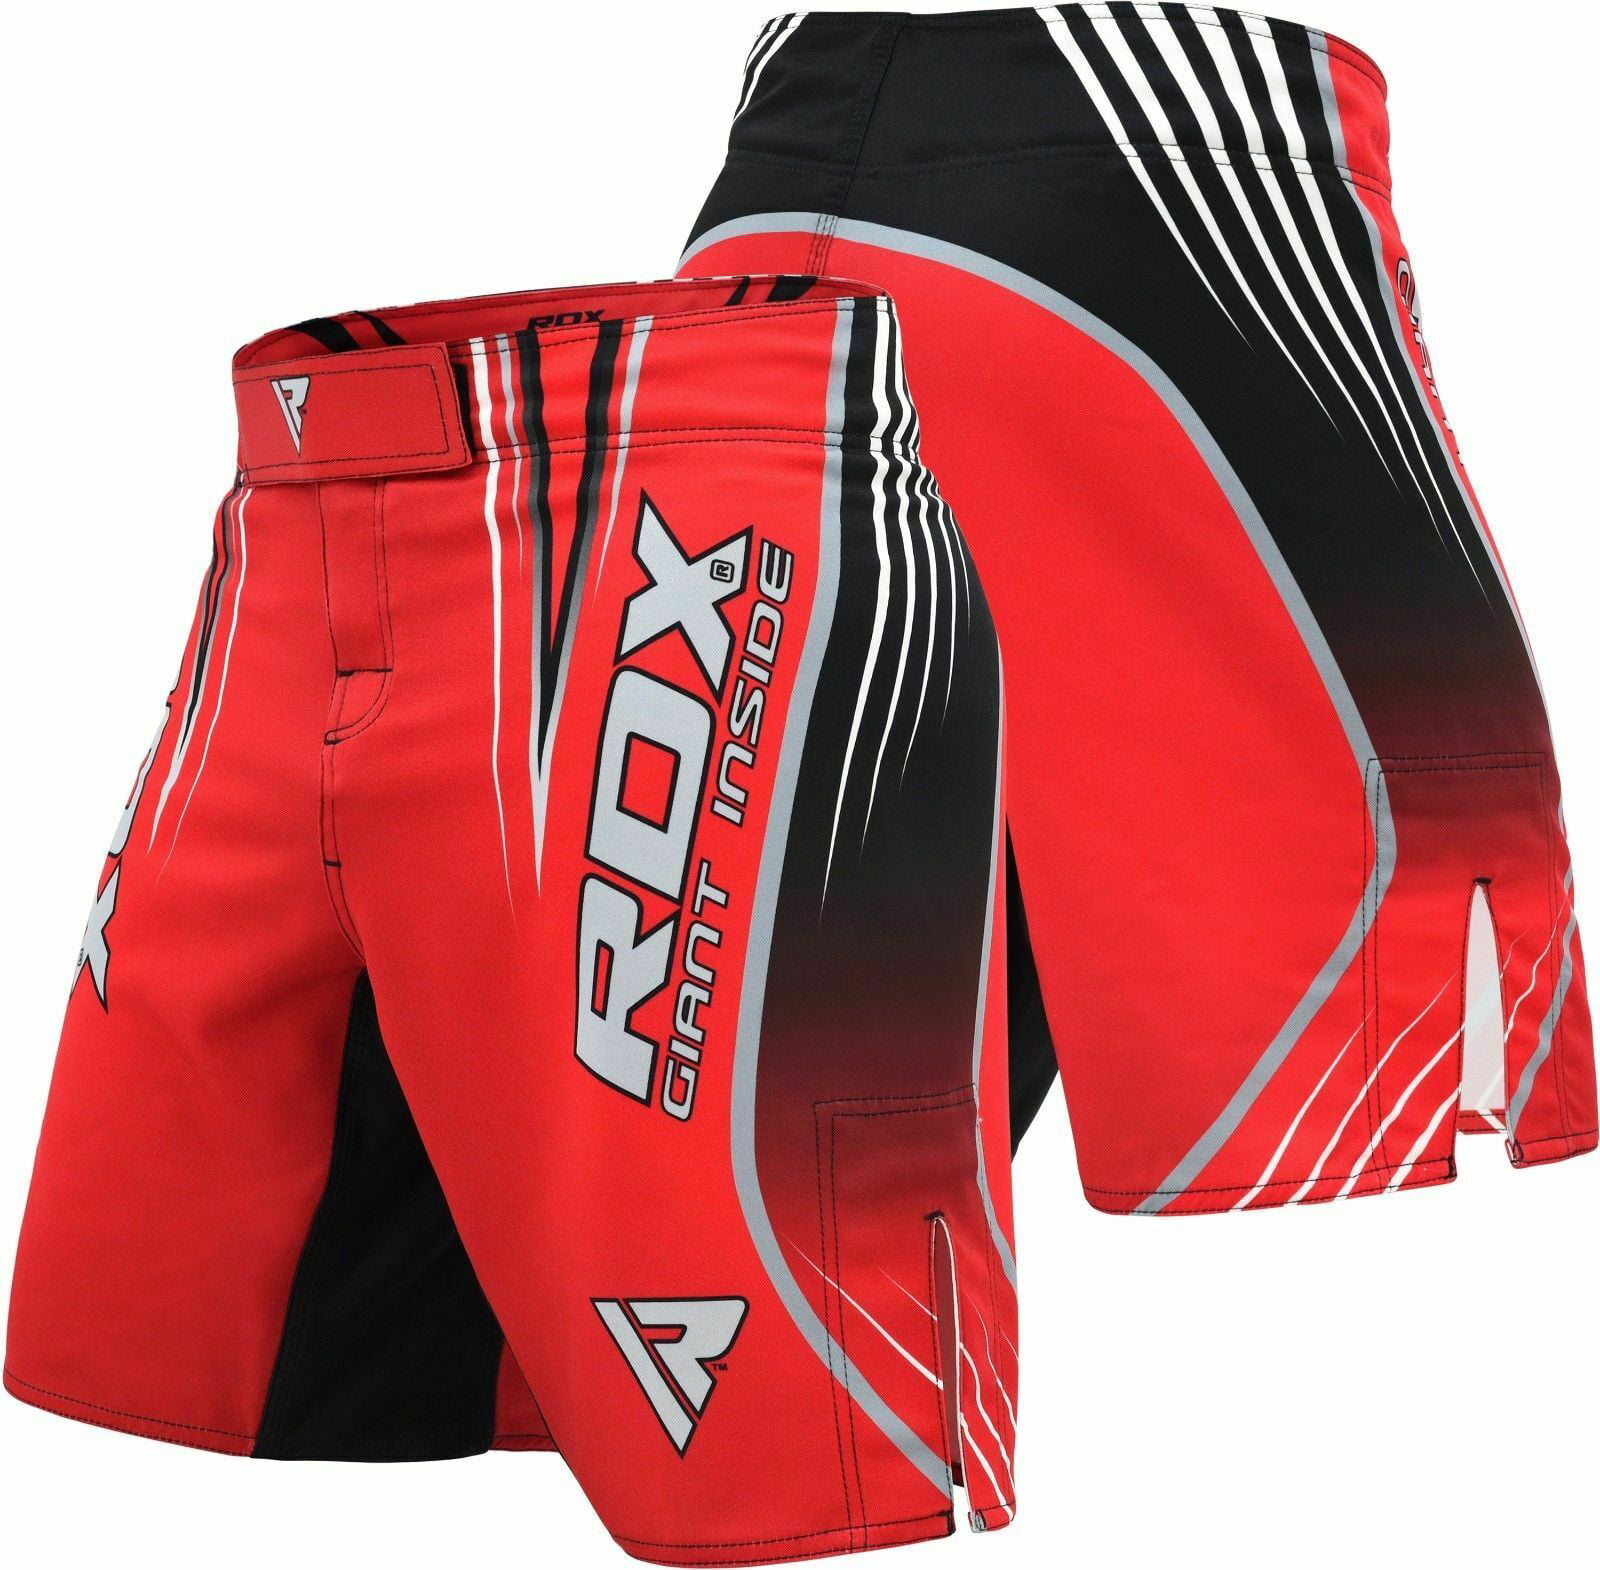 Rdx mma shorts boxing shorts grappling kick fight training pants s 